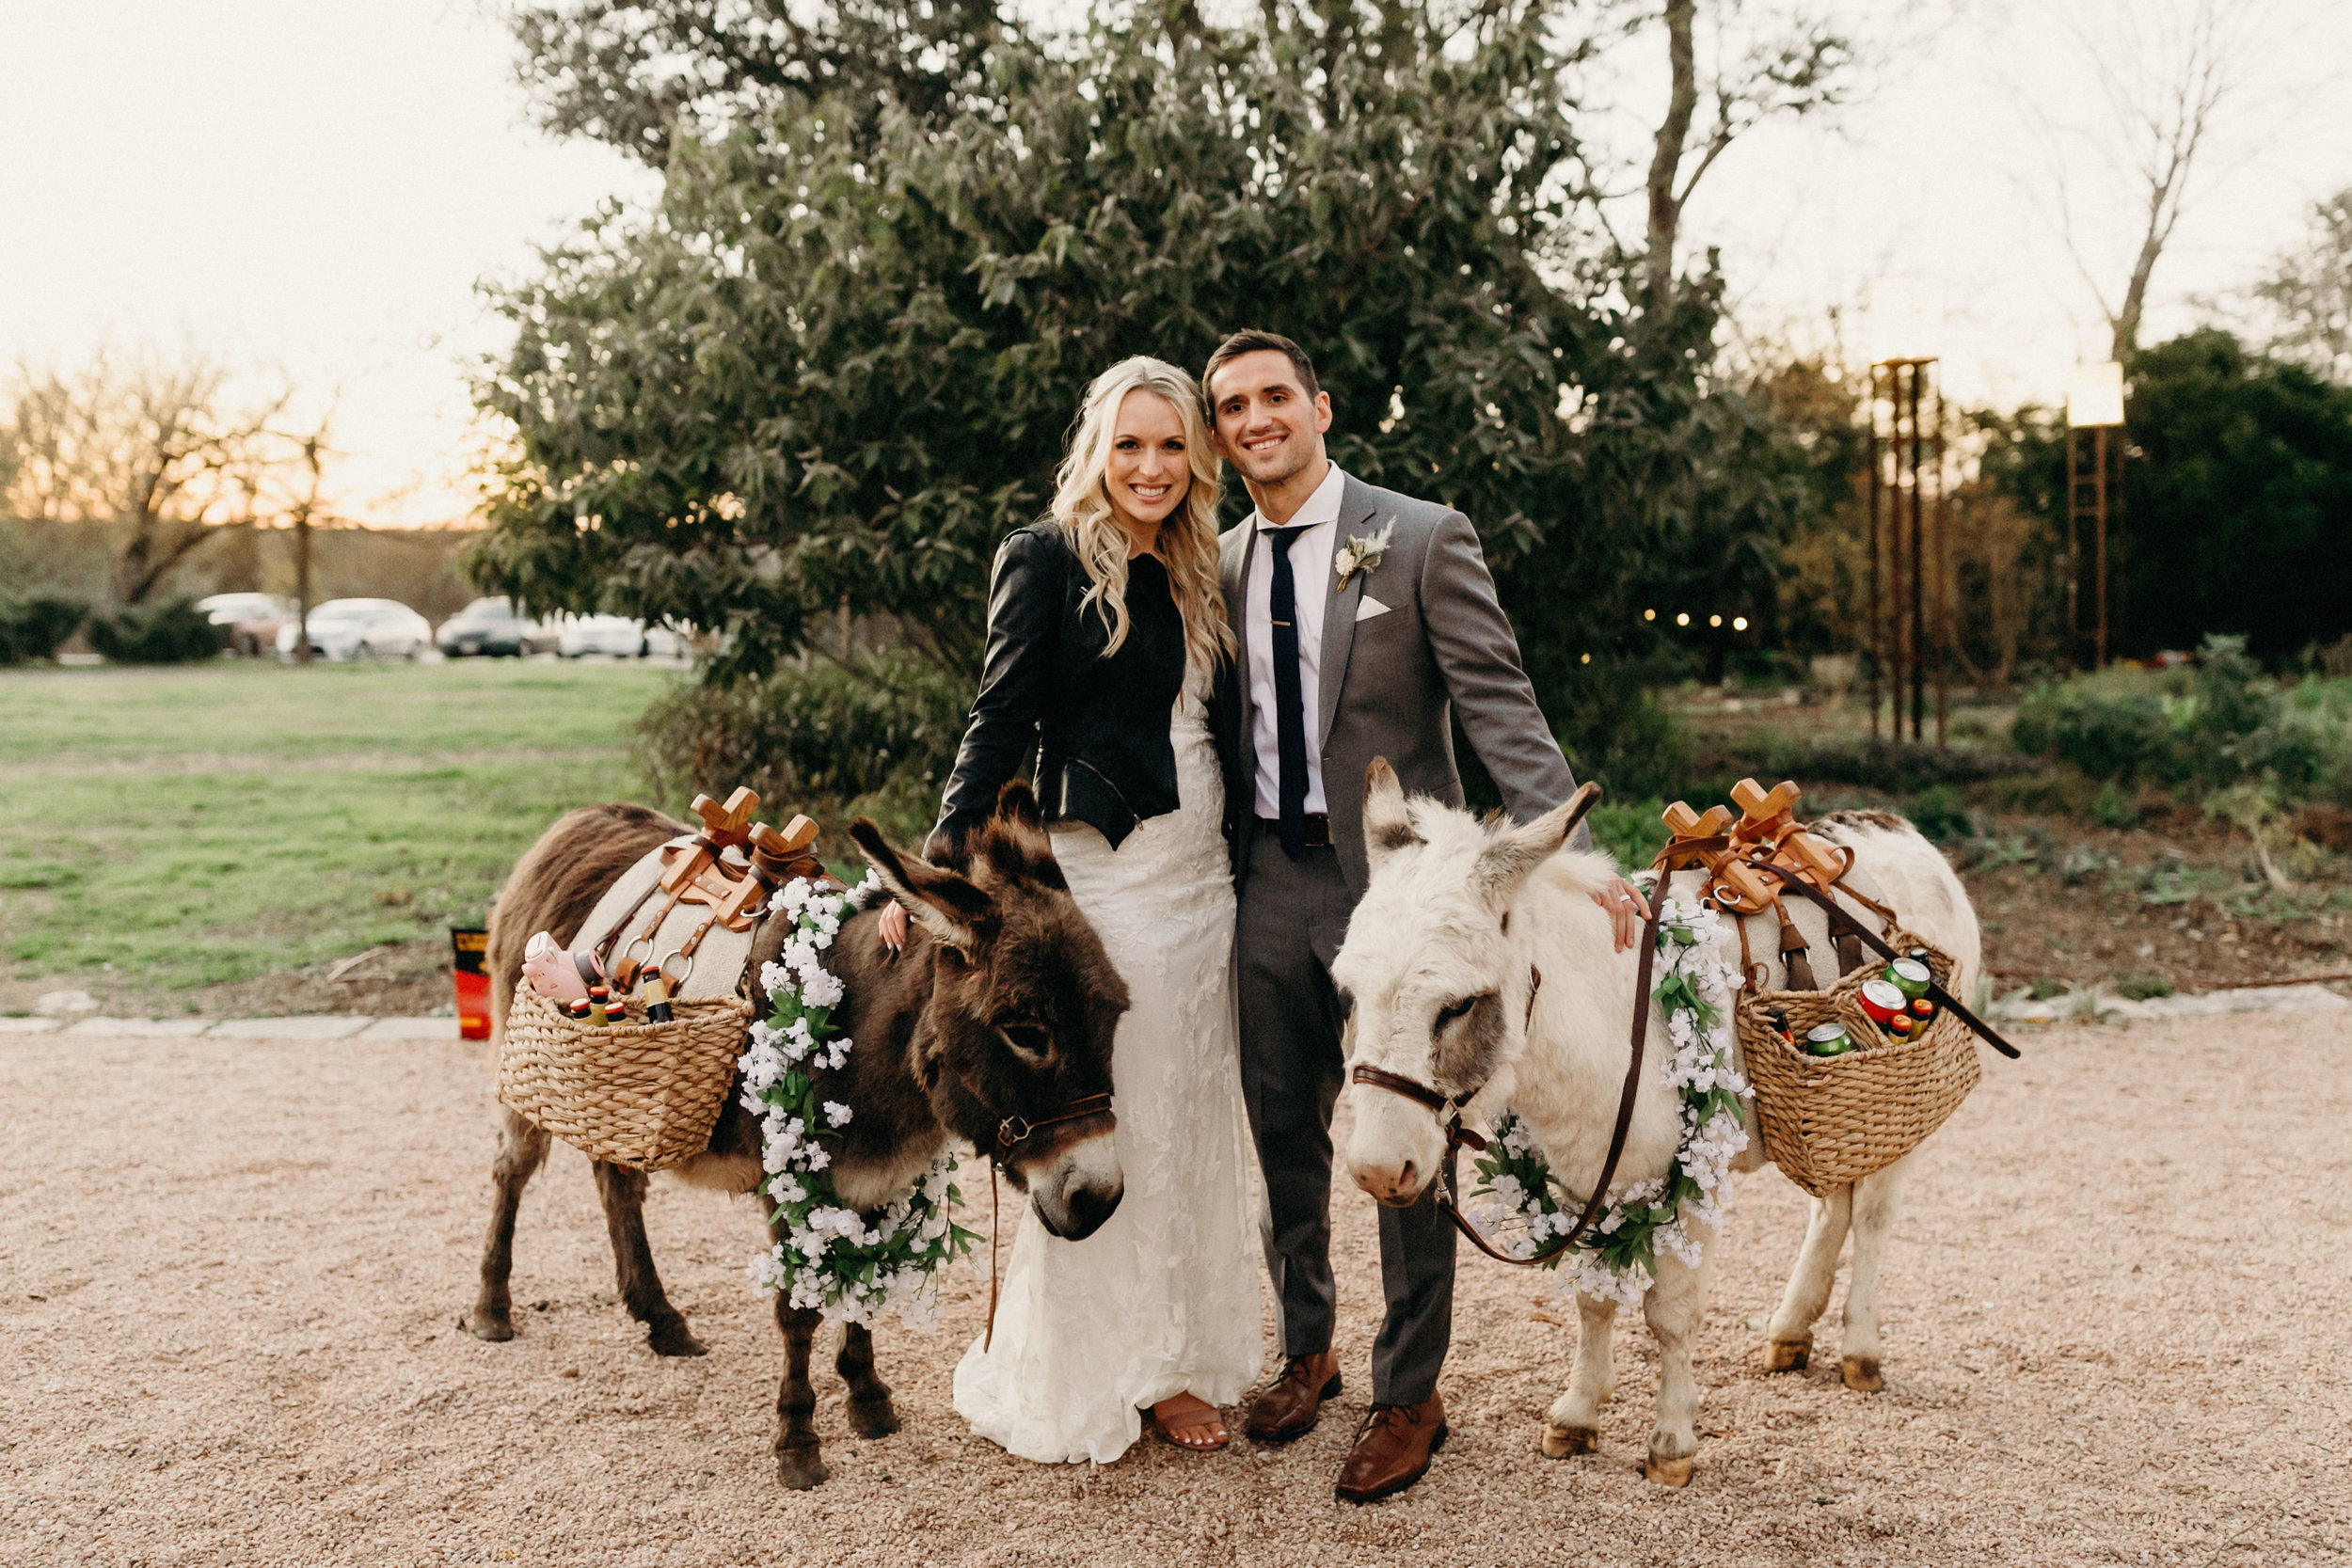 creative bride and groom wedding day portraits, Austin, Texas